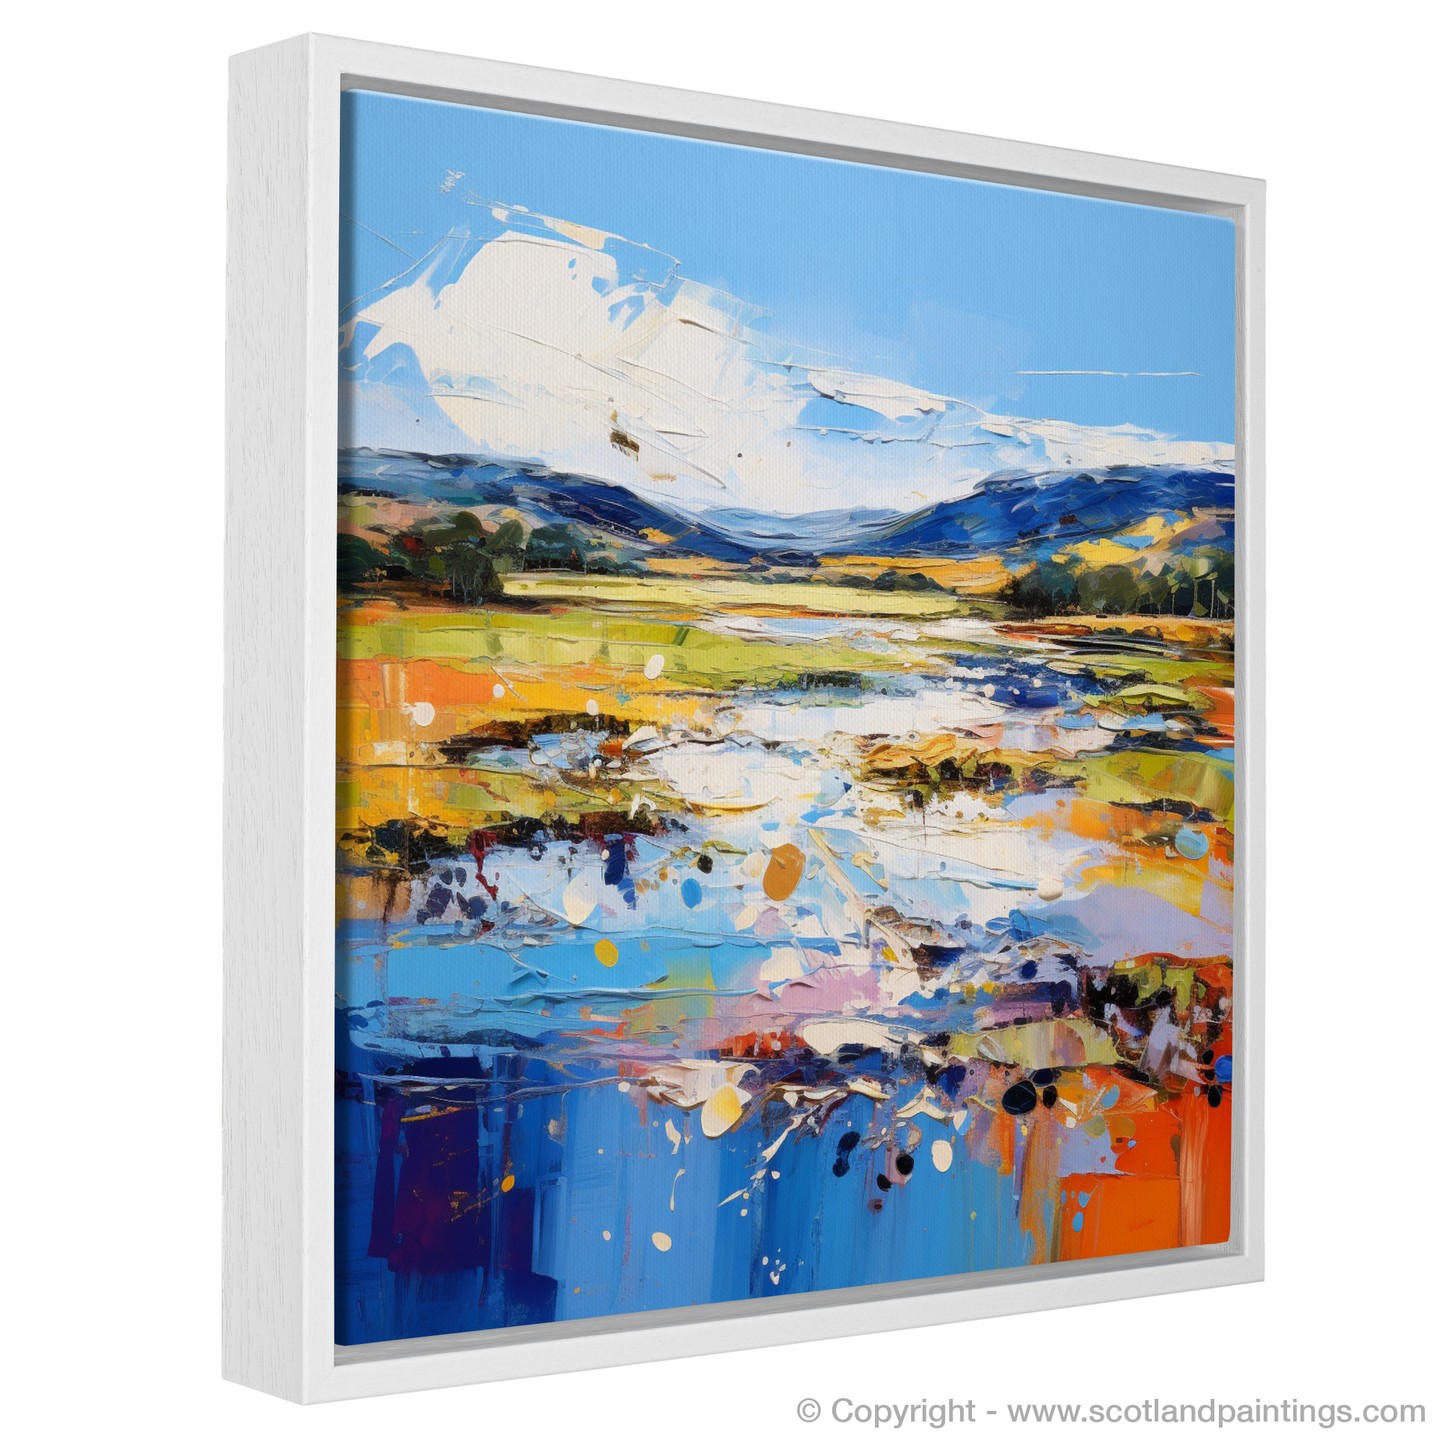 Painting and Art Print of Loch Doon, Ayrshire in summer entitled "Summer Blaze at Loch Doon".